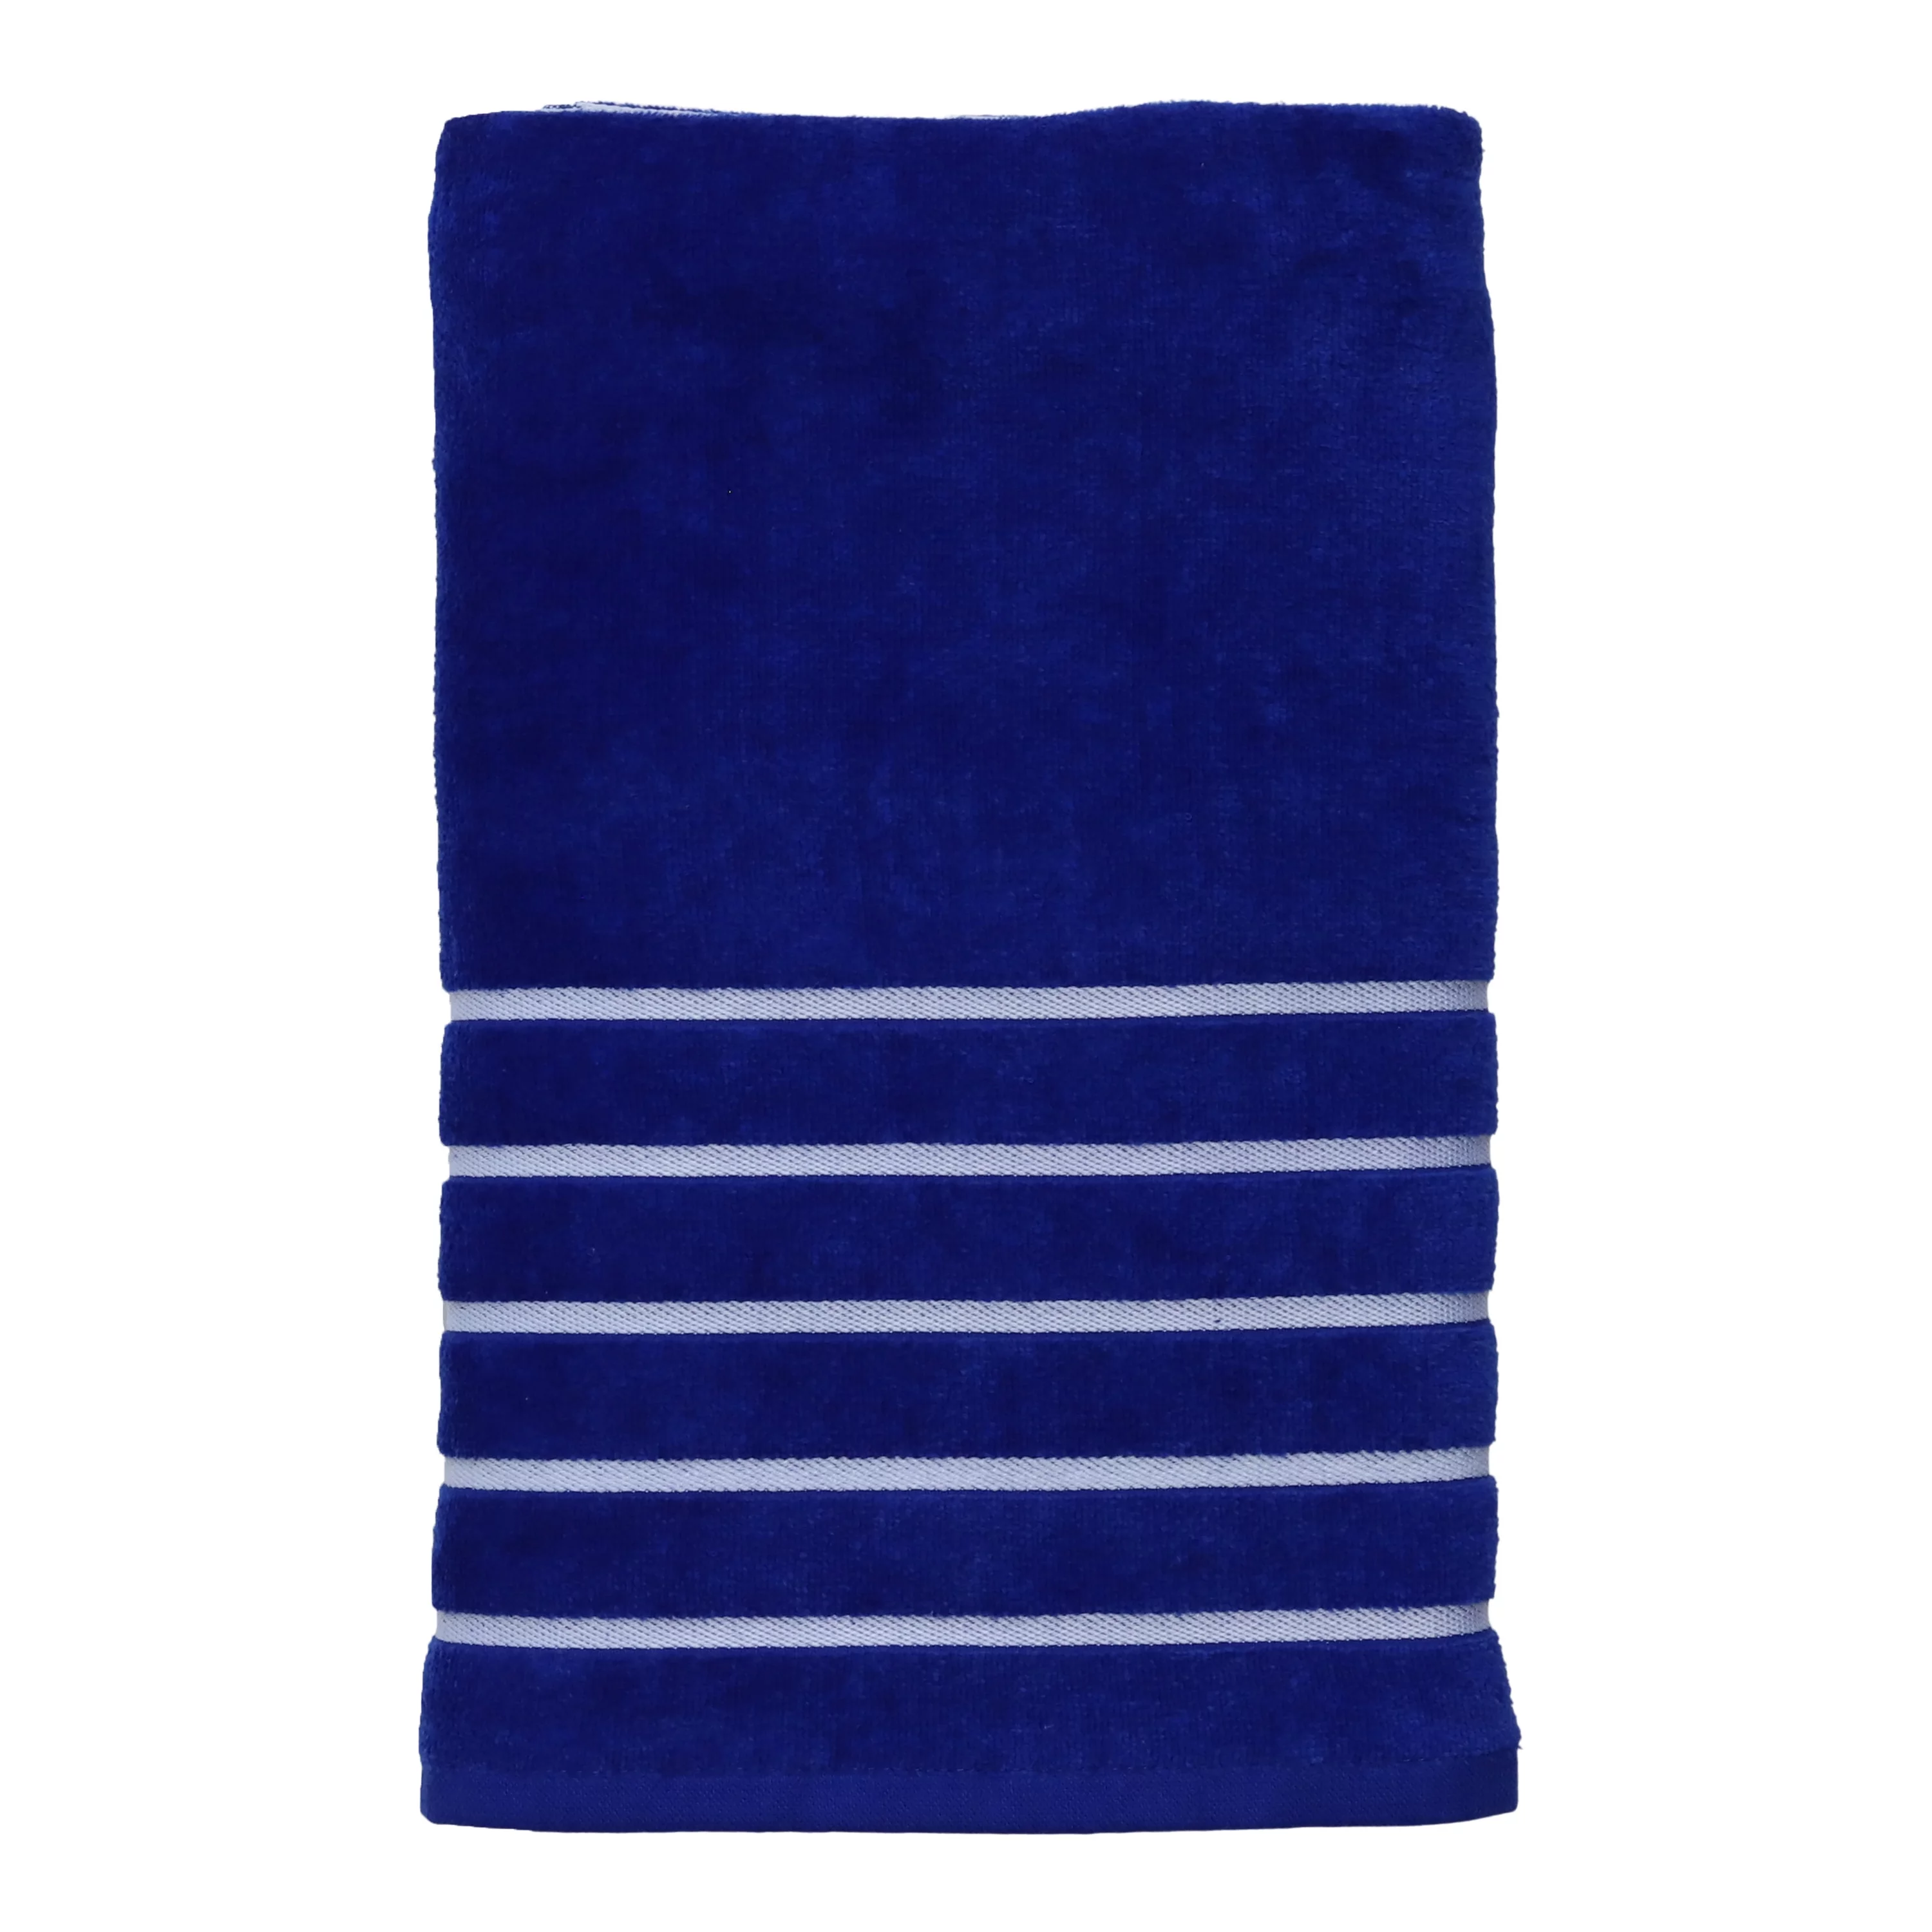 Mainstays Beach Towel, Royal Blue Multi-Stripe